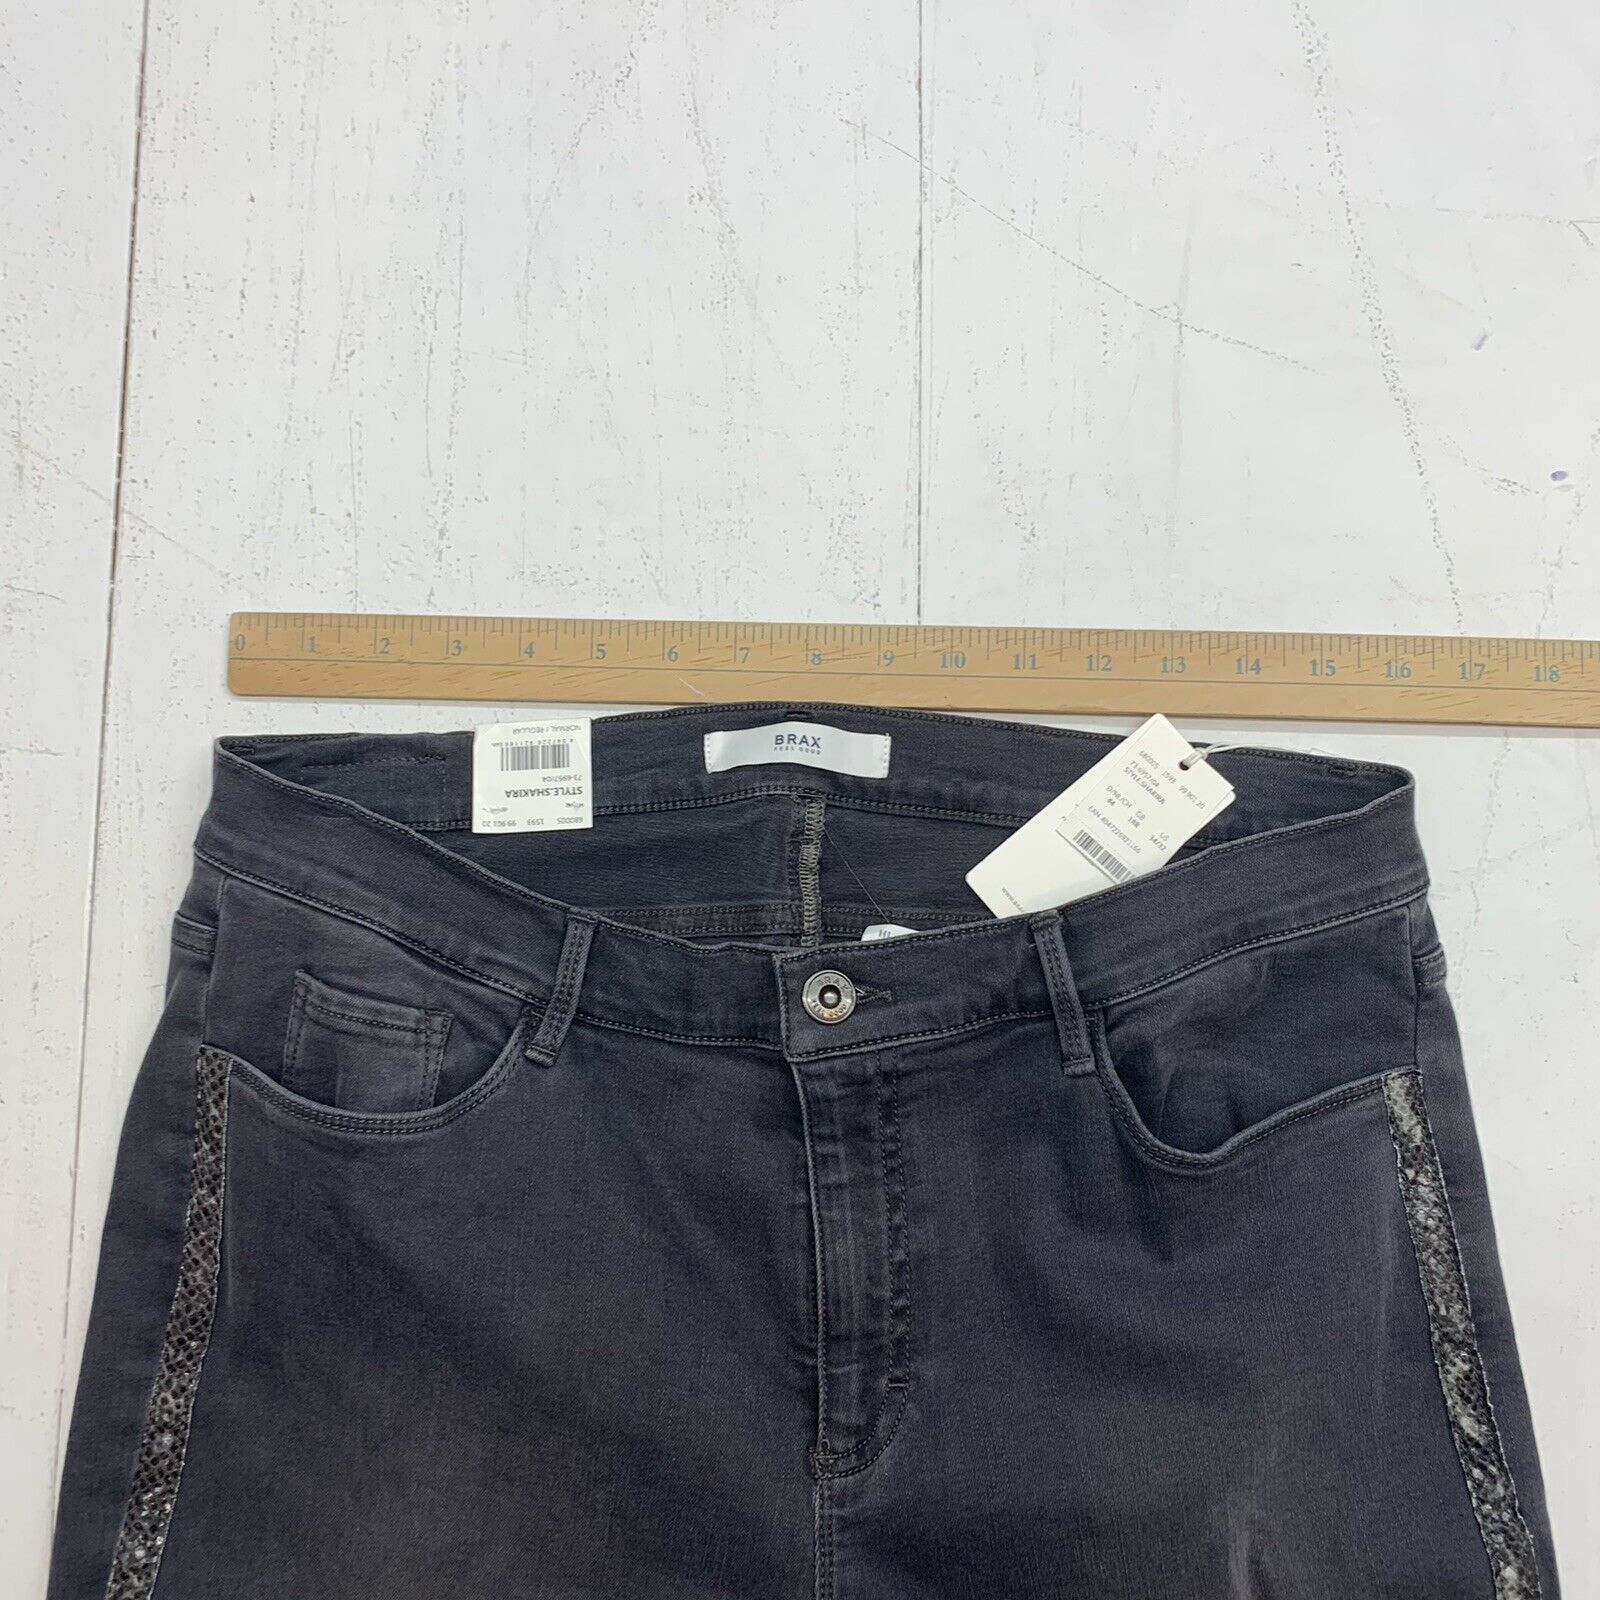 Brax Womens Shakira Skinny jeans size 34/32 - beyond exchange